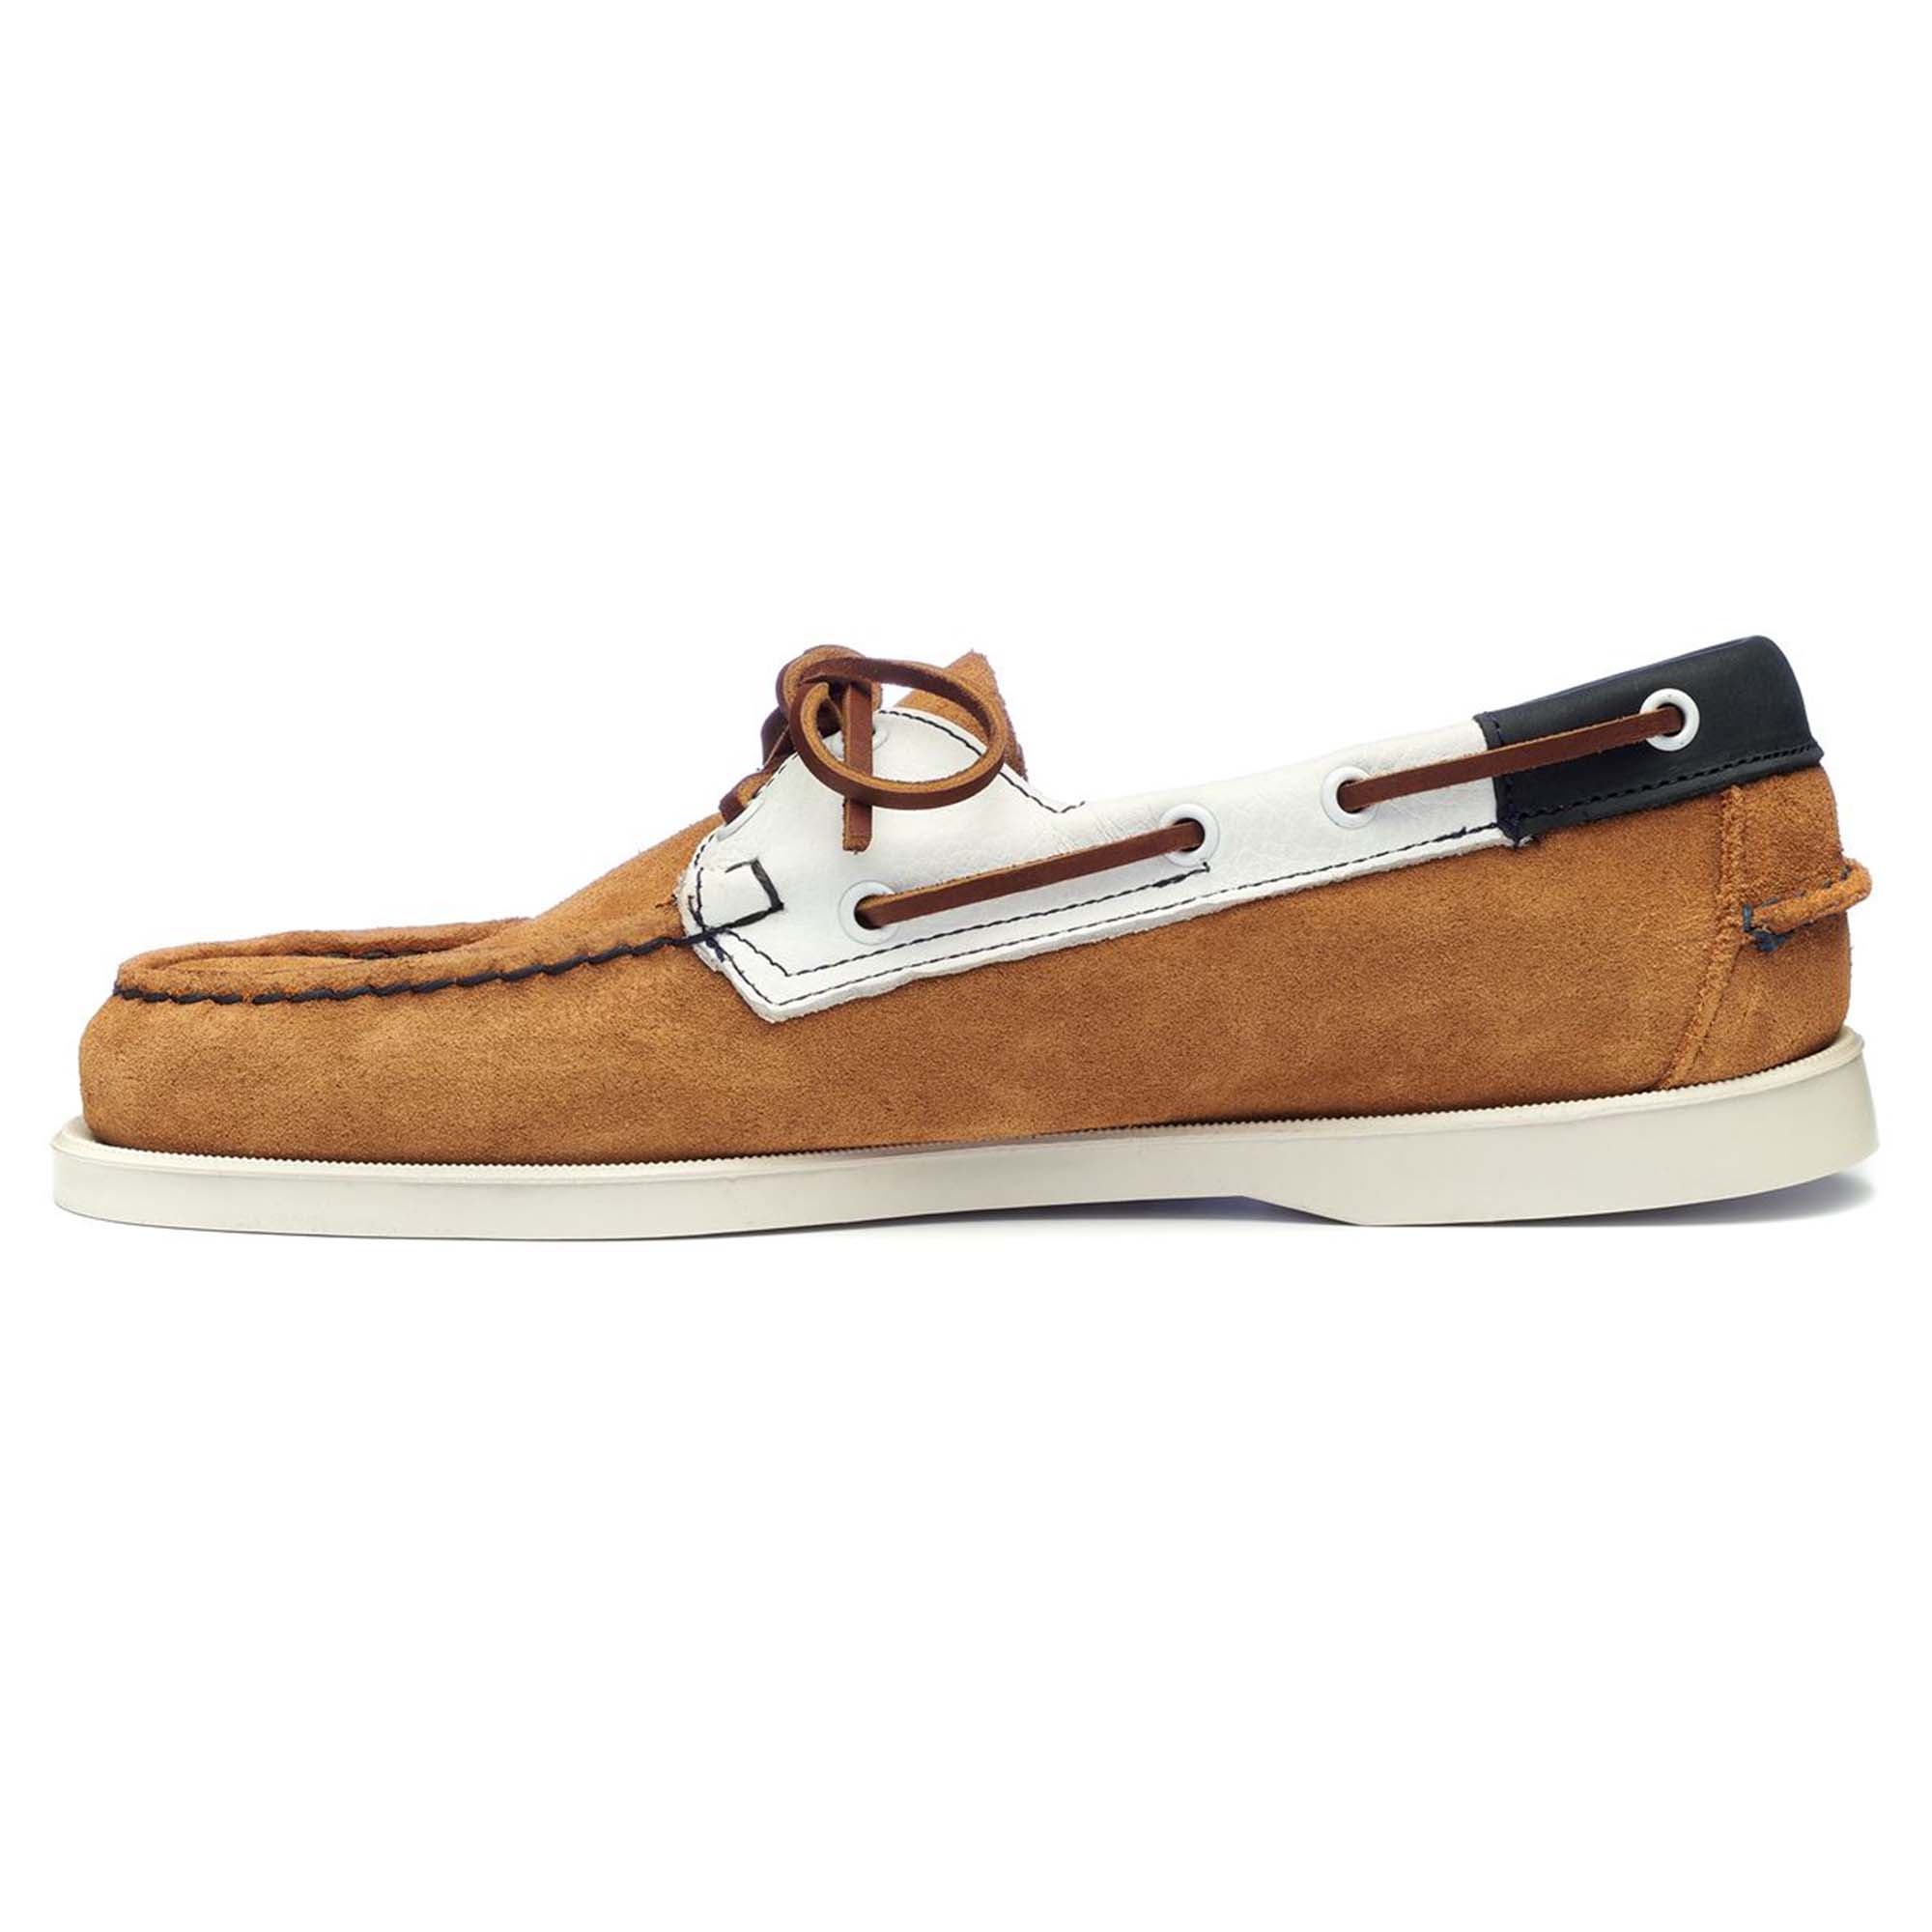 Sebago Portland Suede Nubuck Tumbled Boat Shoes - Brown/Navy/White